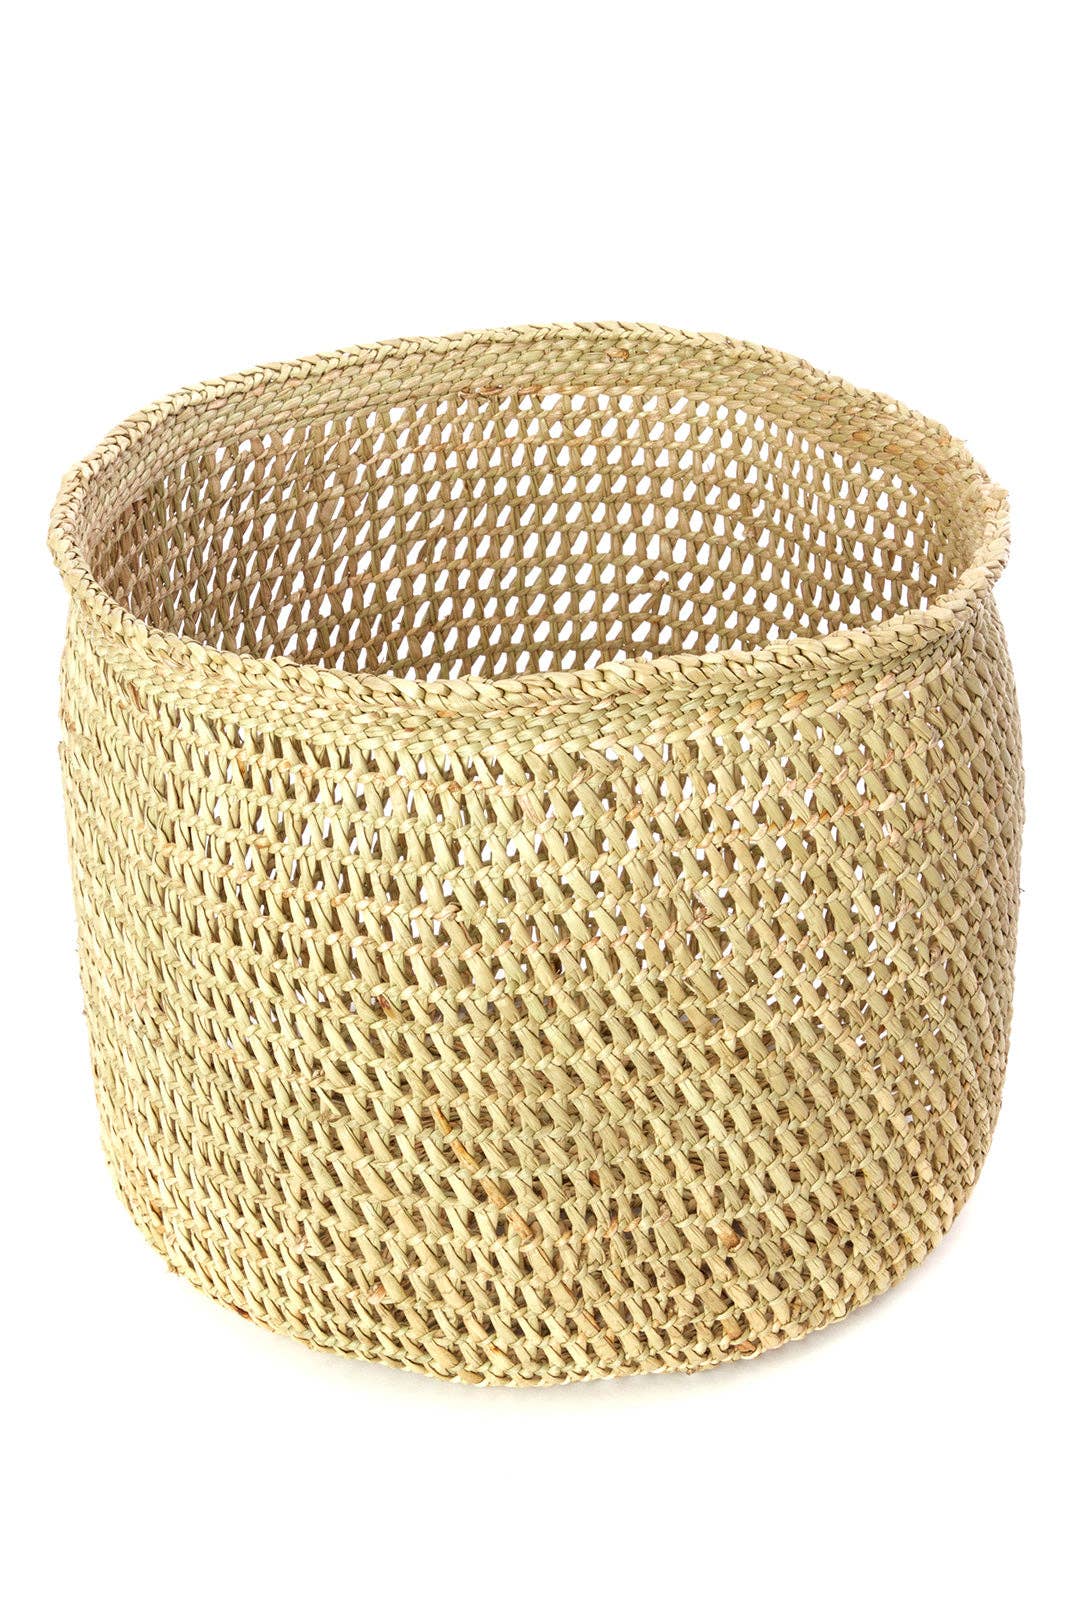 Open Weave Iringa Baskets